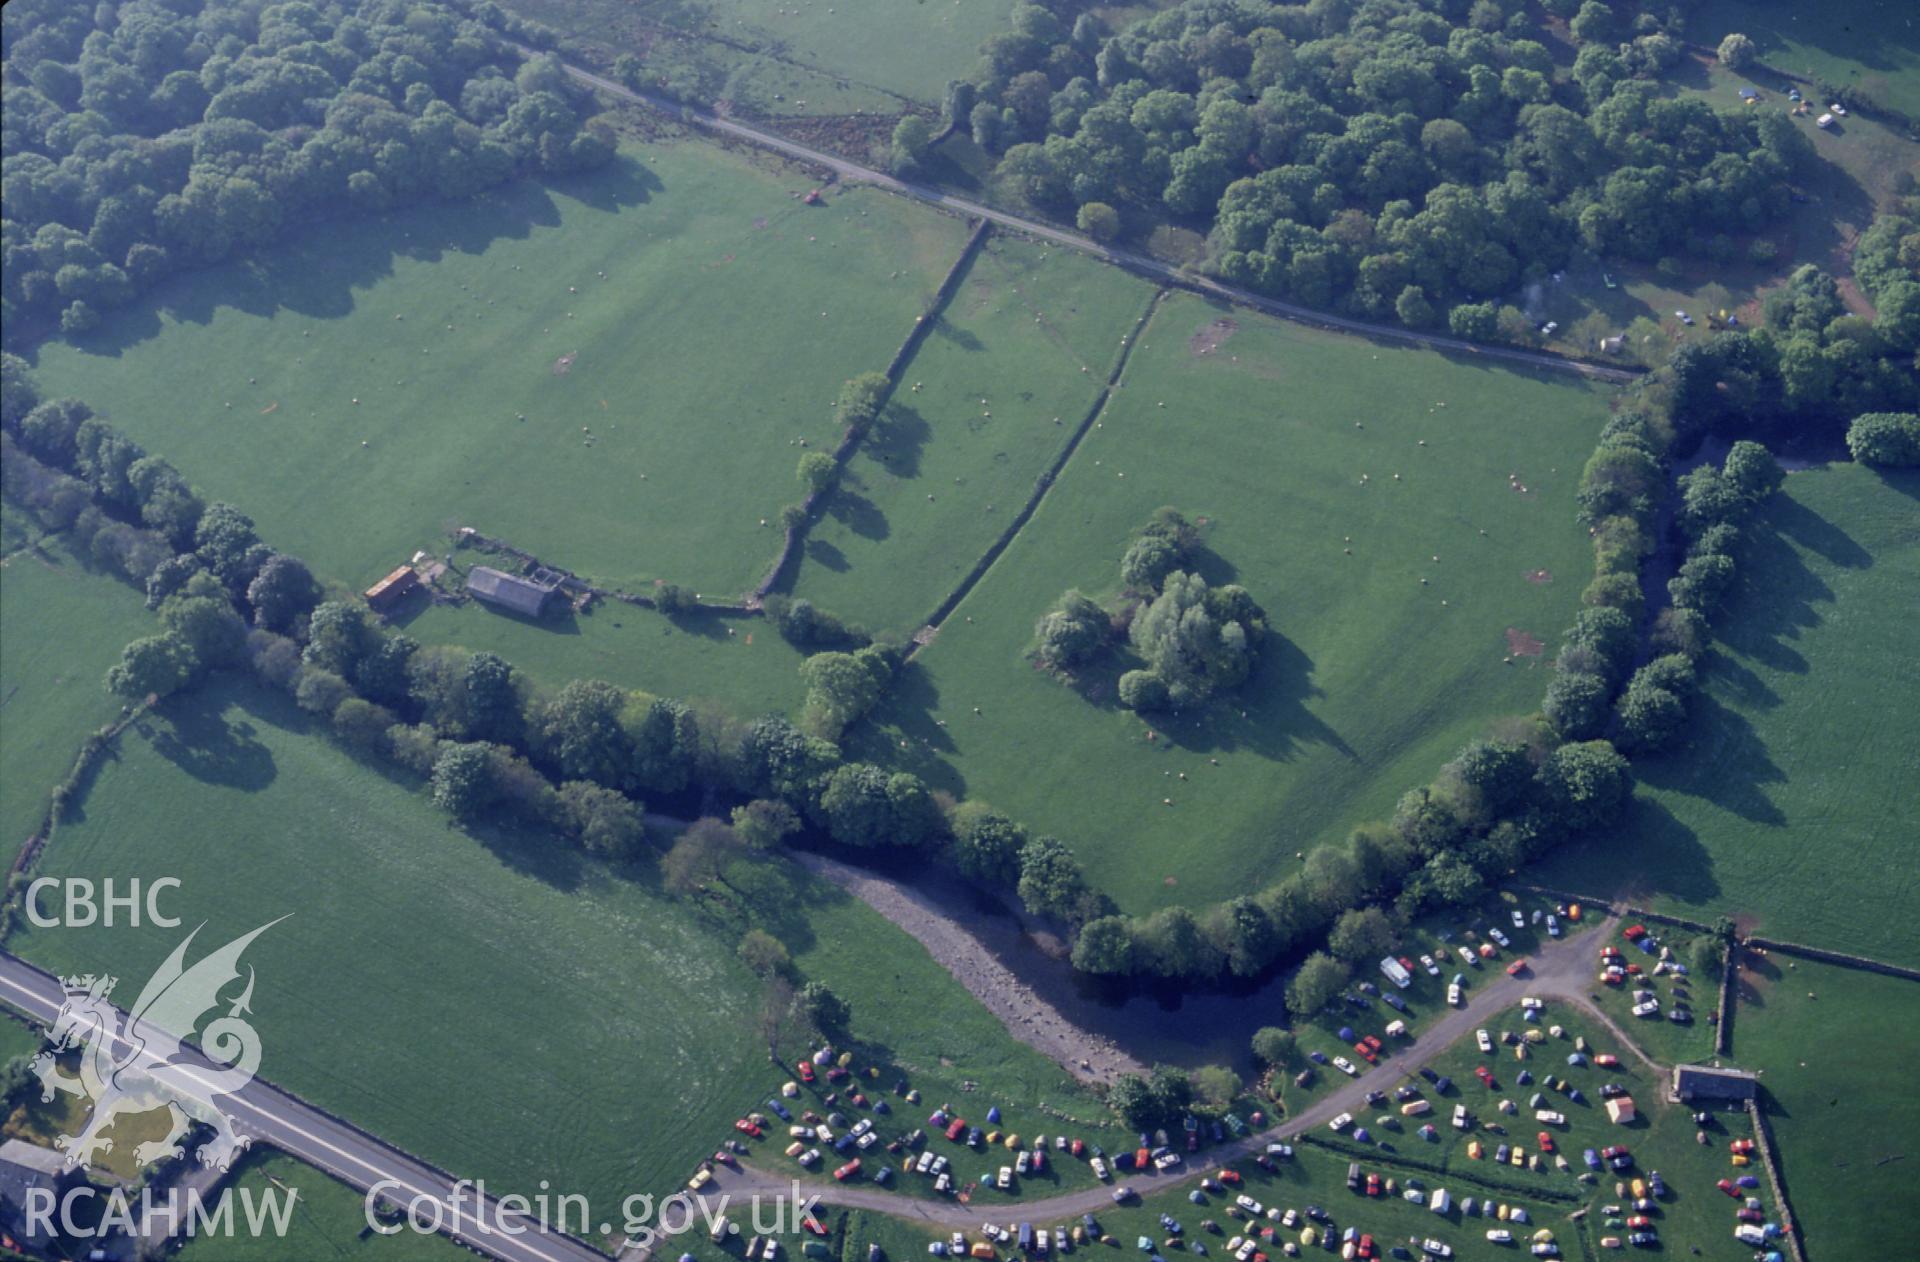 Slide of RCAHMW colour oblique aerial photograph of Bryn-y-gefeiliau Roman Site, taken by C.R. Musson, 30/5/1994.